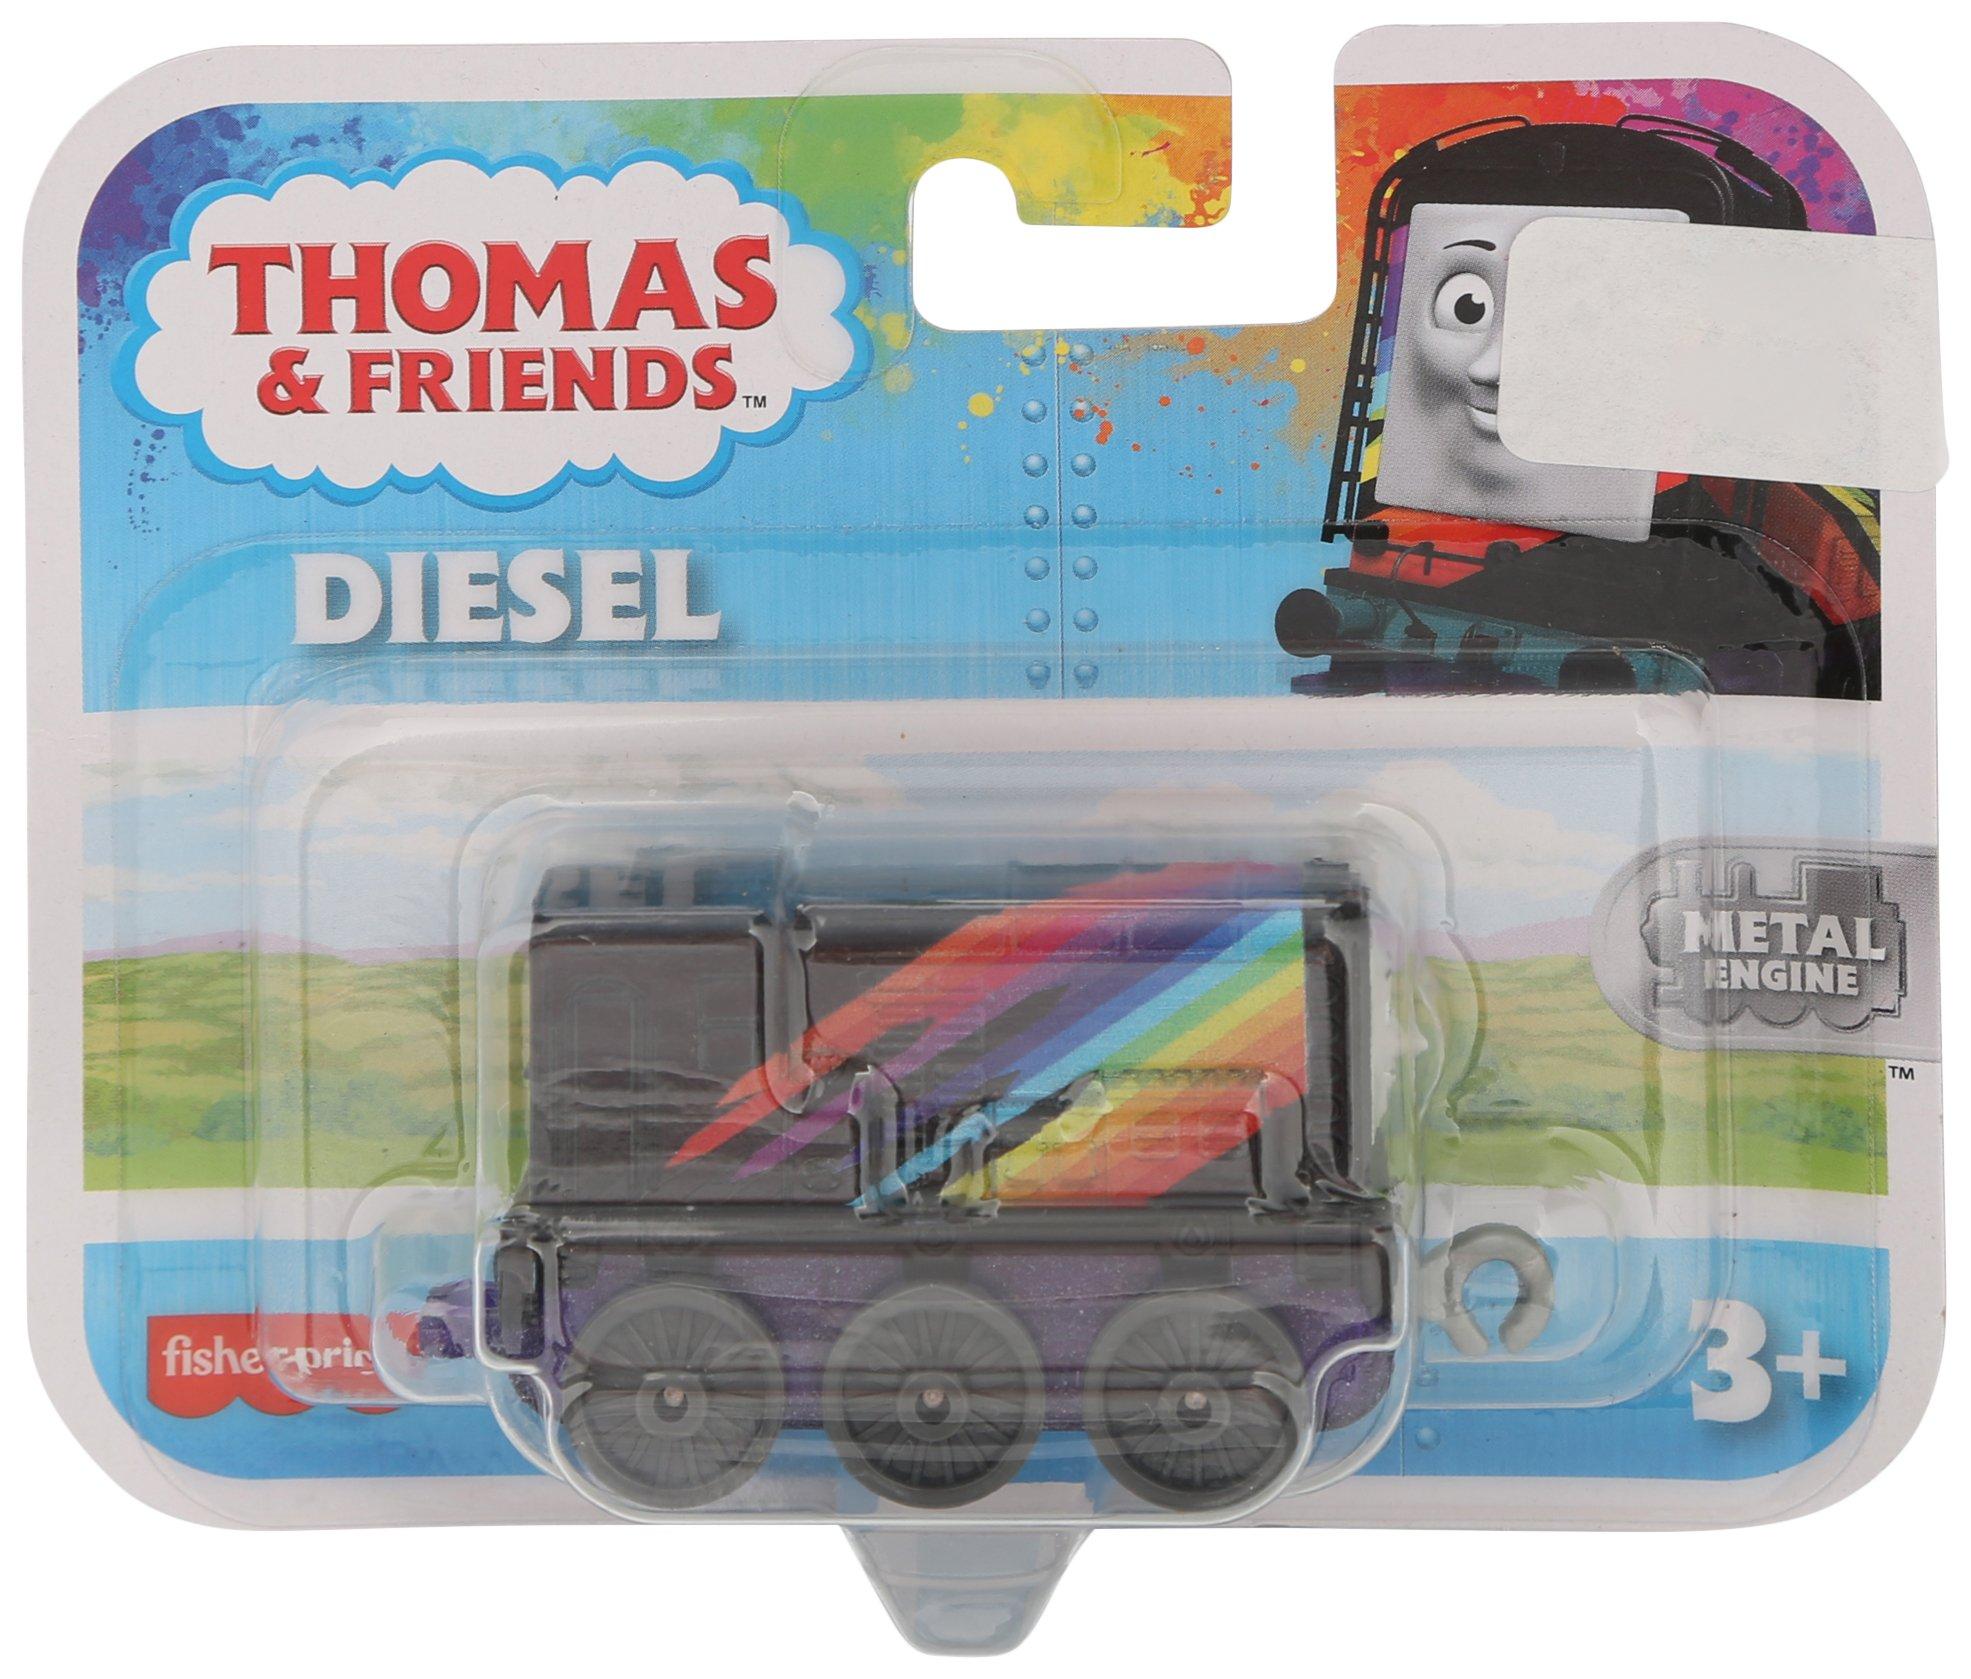 Fisher-Price Thomas & Friends Diesel Toy Engine